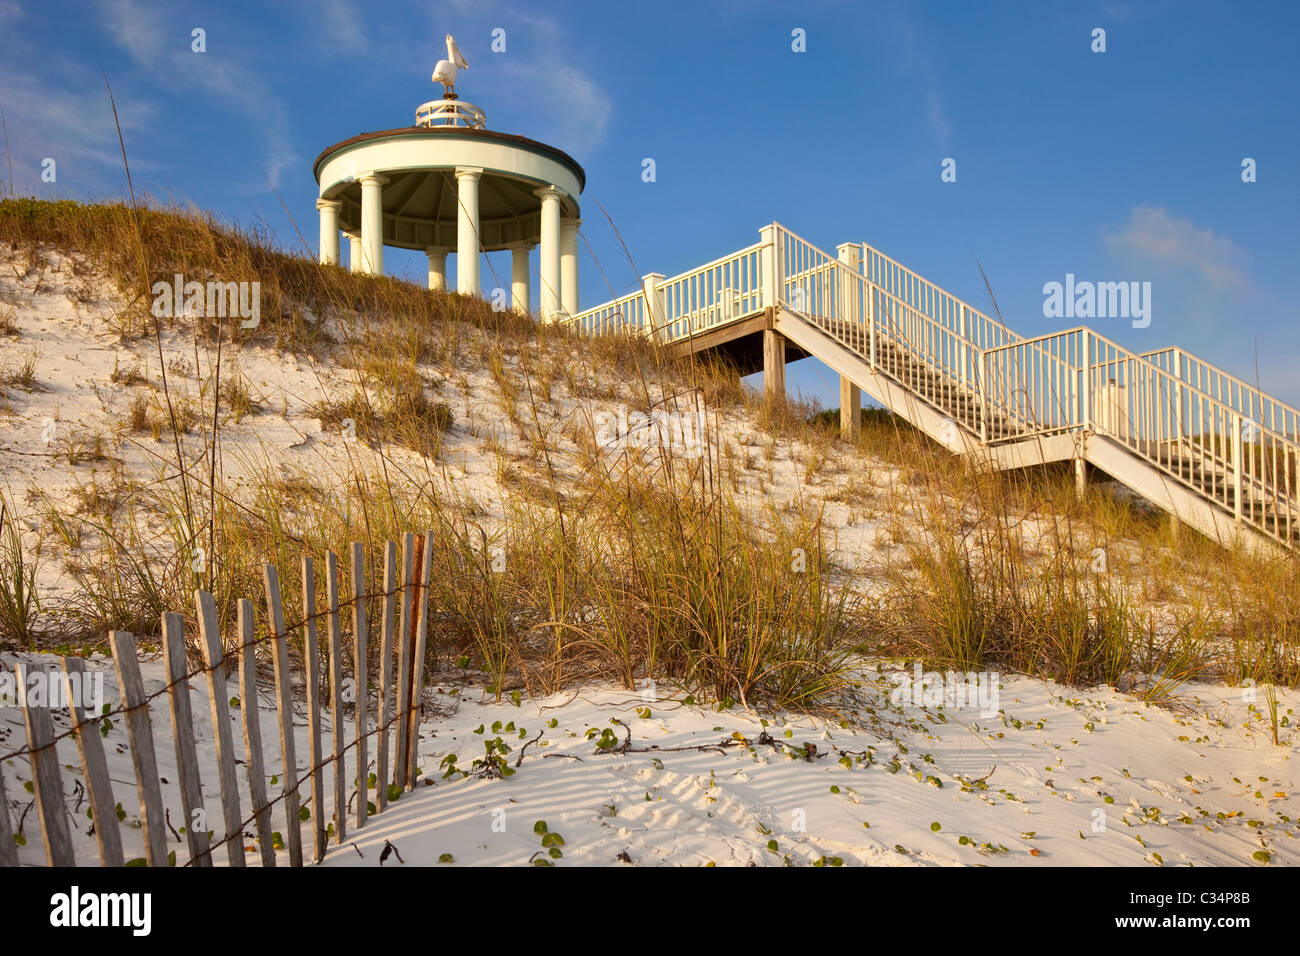 Escaleras y pasarela sobre dune conduce a playa en Seaside Florida USA Foto de stock